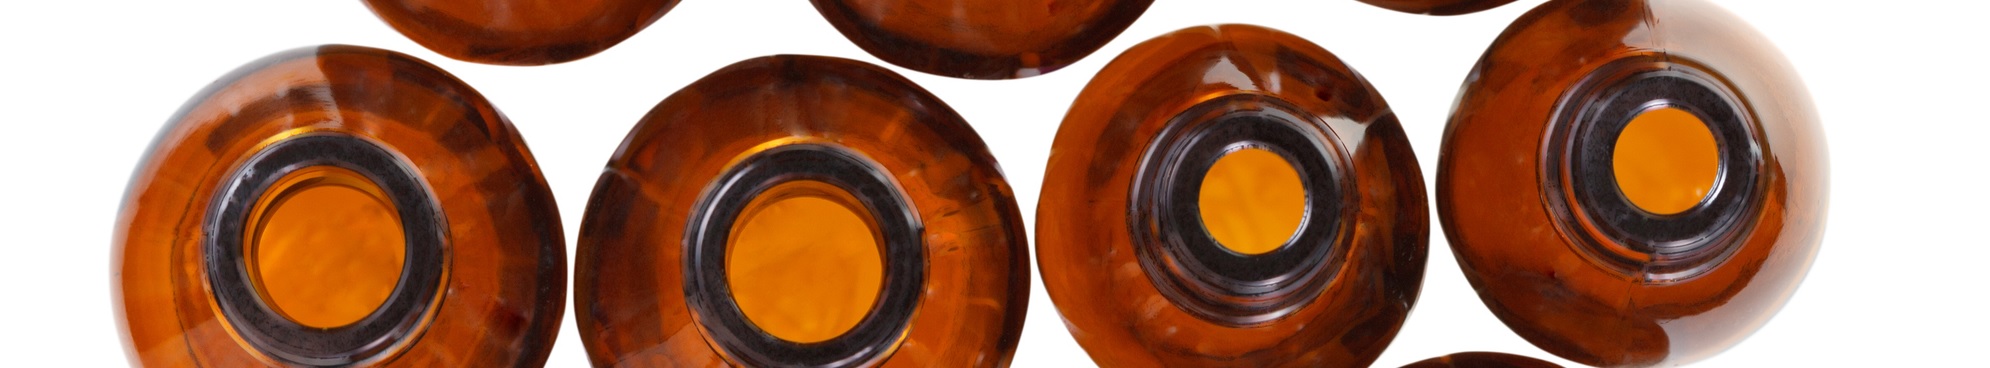 Amber glass antibiotic bottles